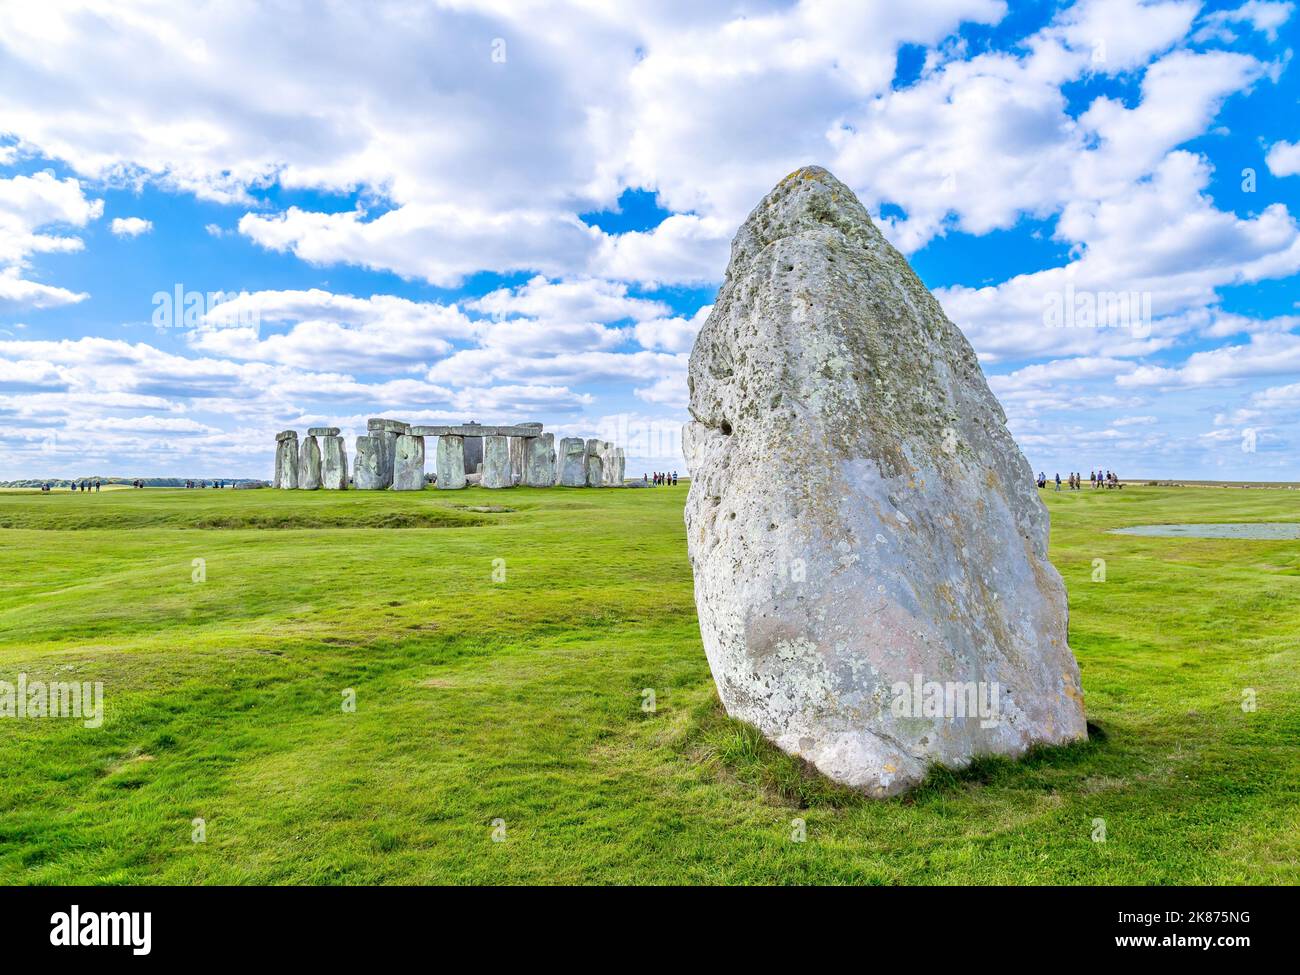 The Heel Stone and Stonehenge Prehistoric Monument, UNESCO World Heritage Site, near Amesbury, Wiltshire, England, United Kingdom, Europe Stock Photo